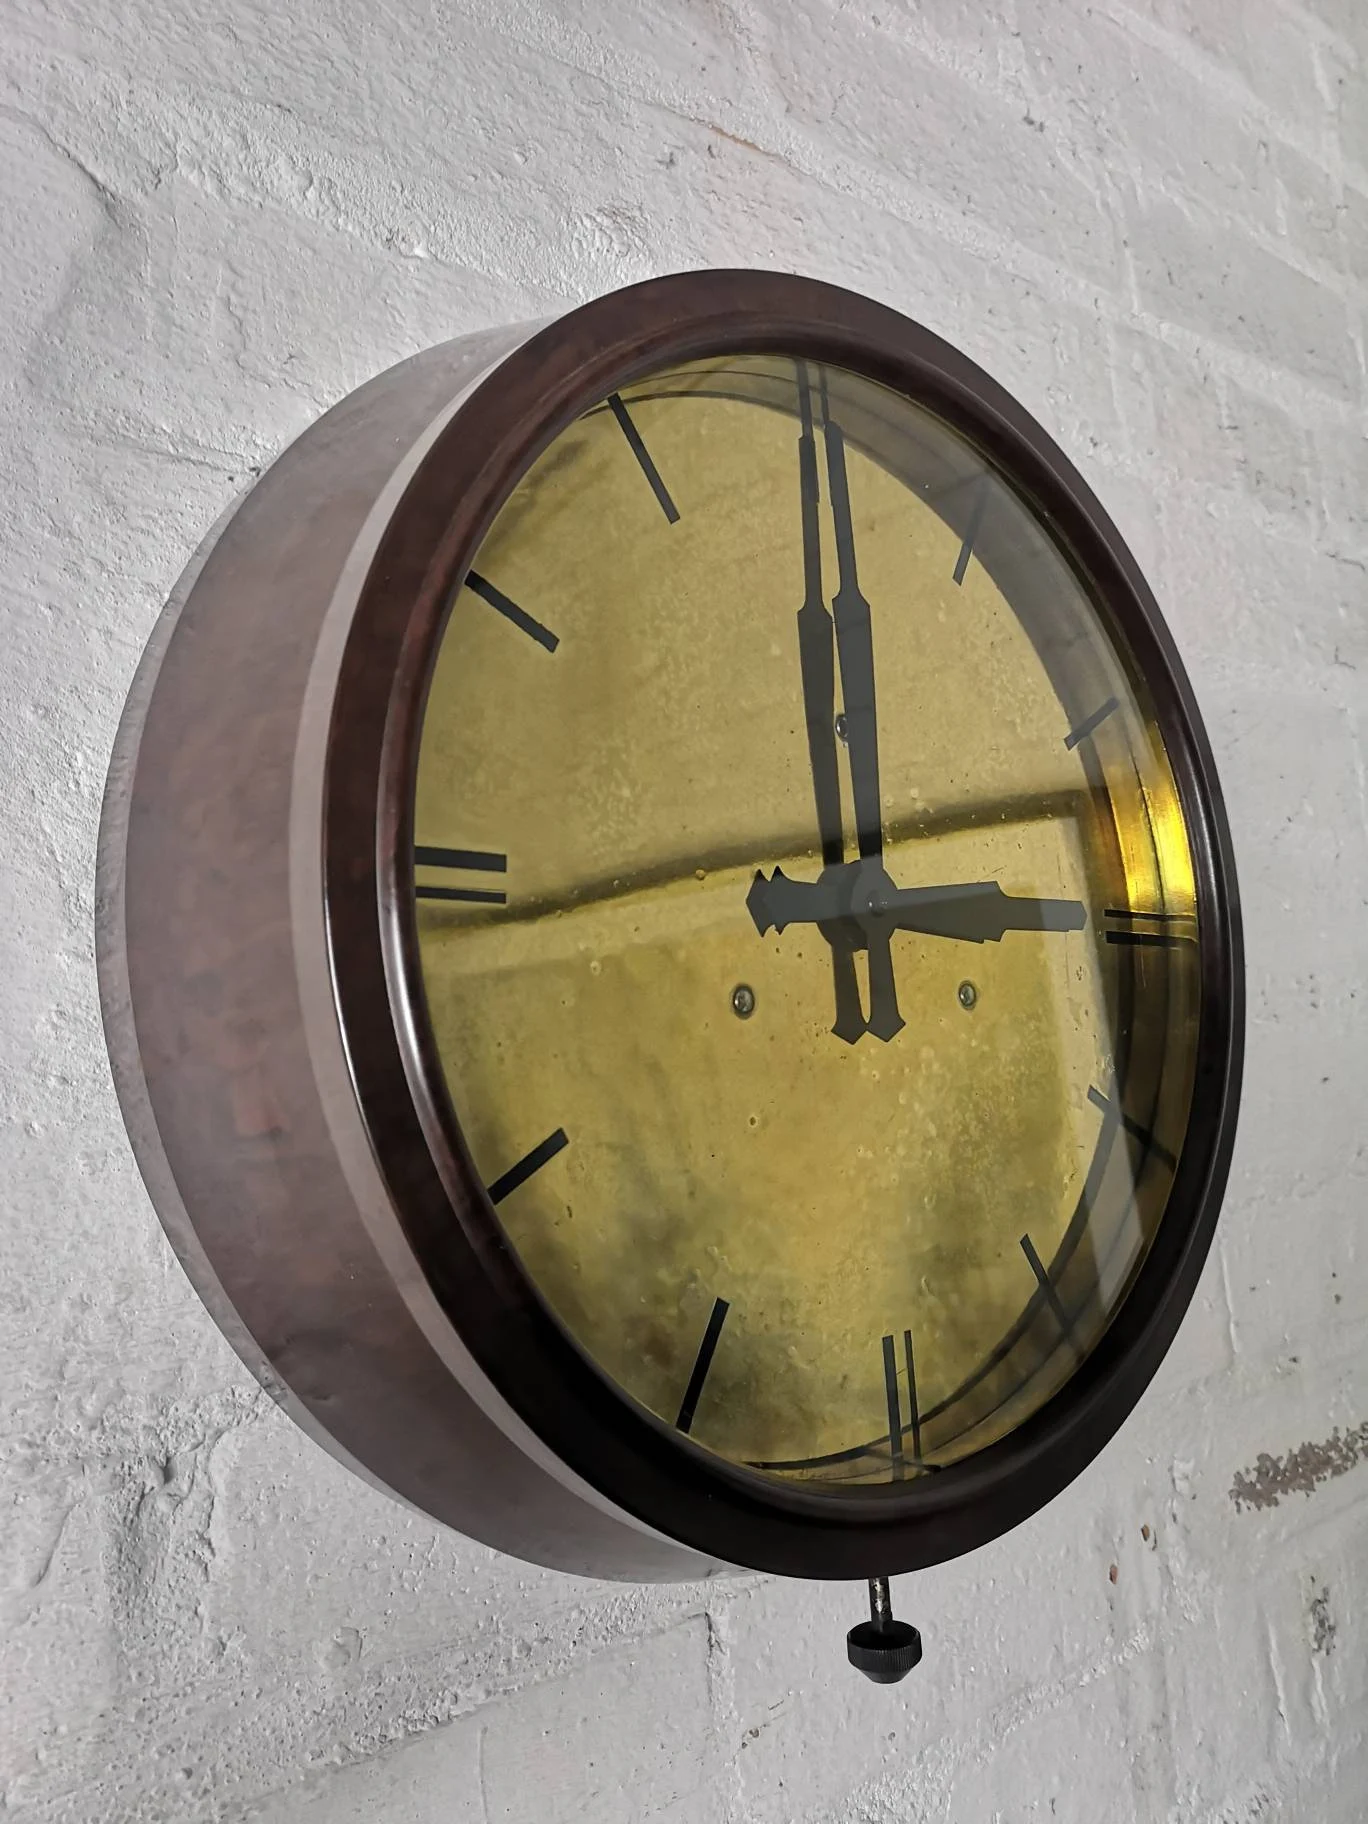 1940s Bakelite & Brass Electric Factory Clock By SEC Smiths English Clocks London